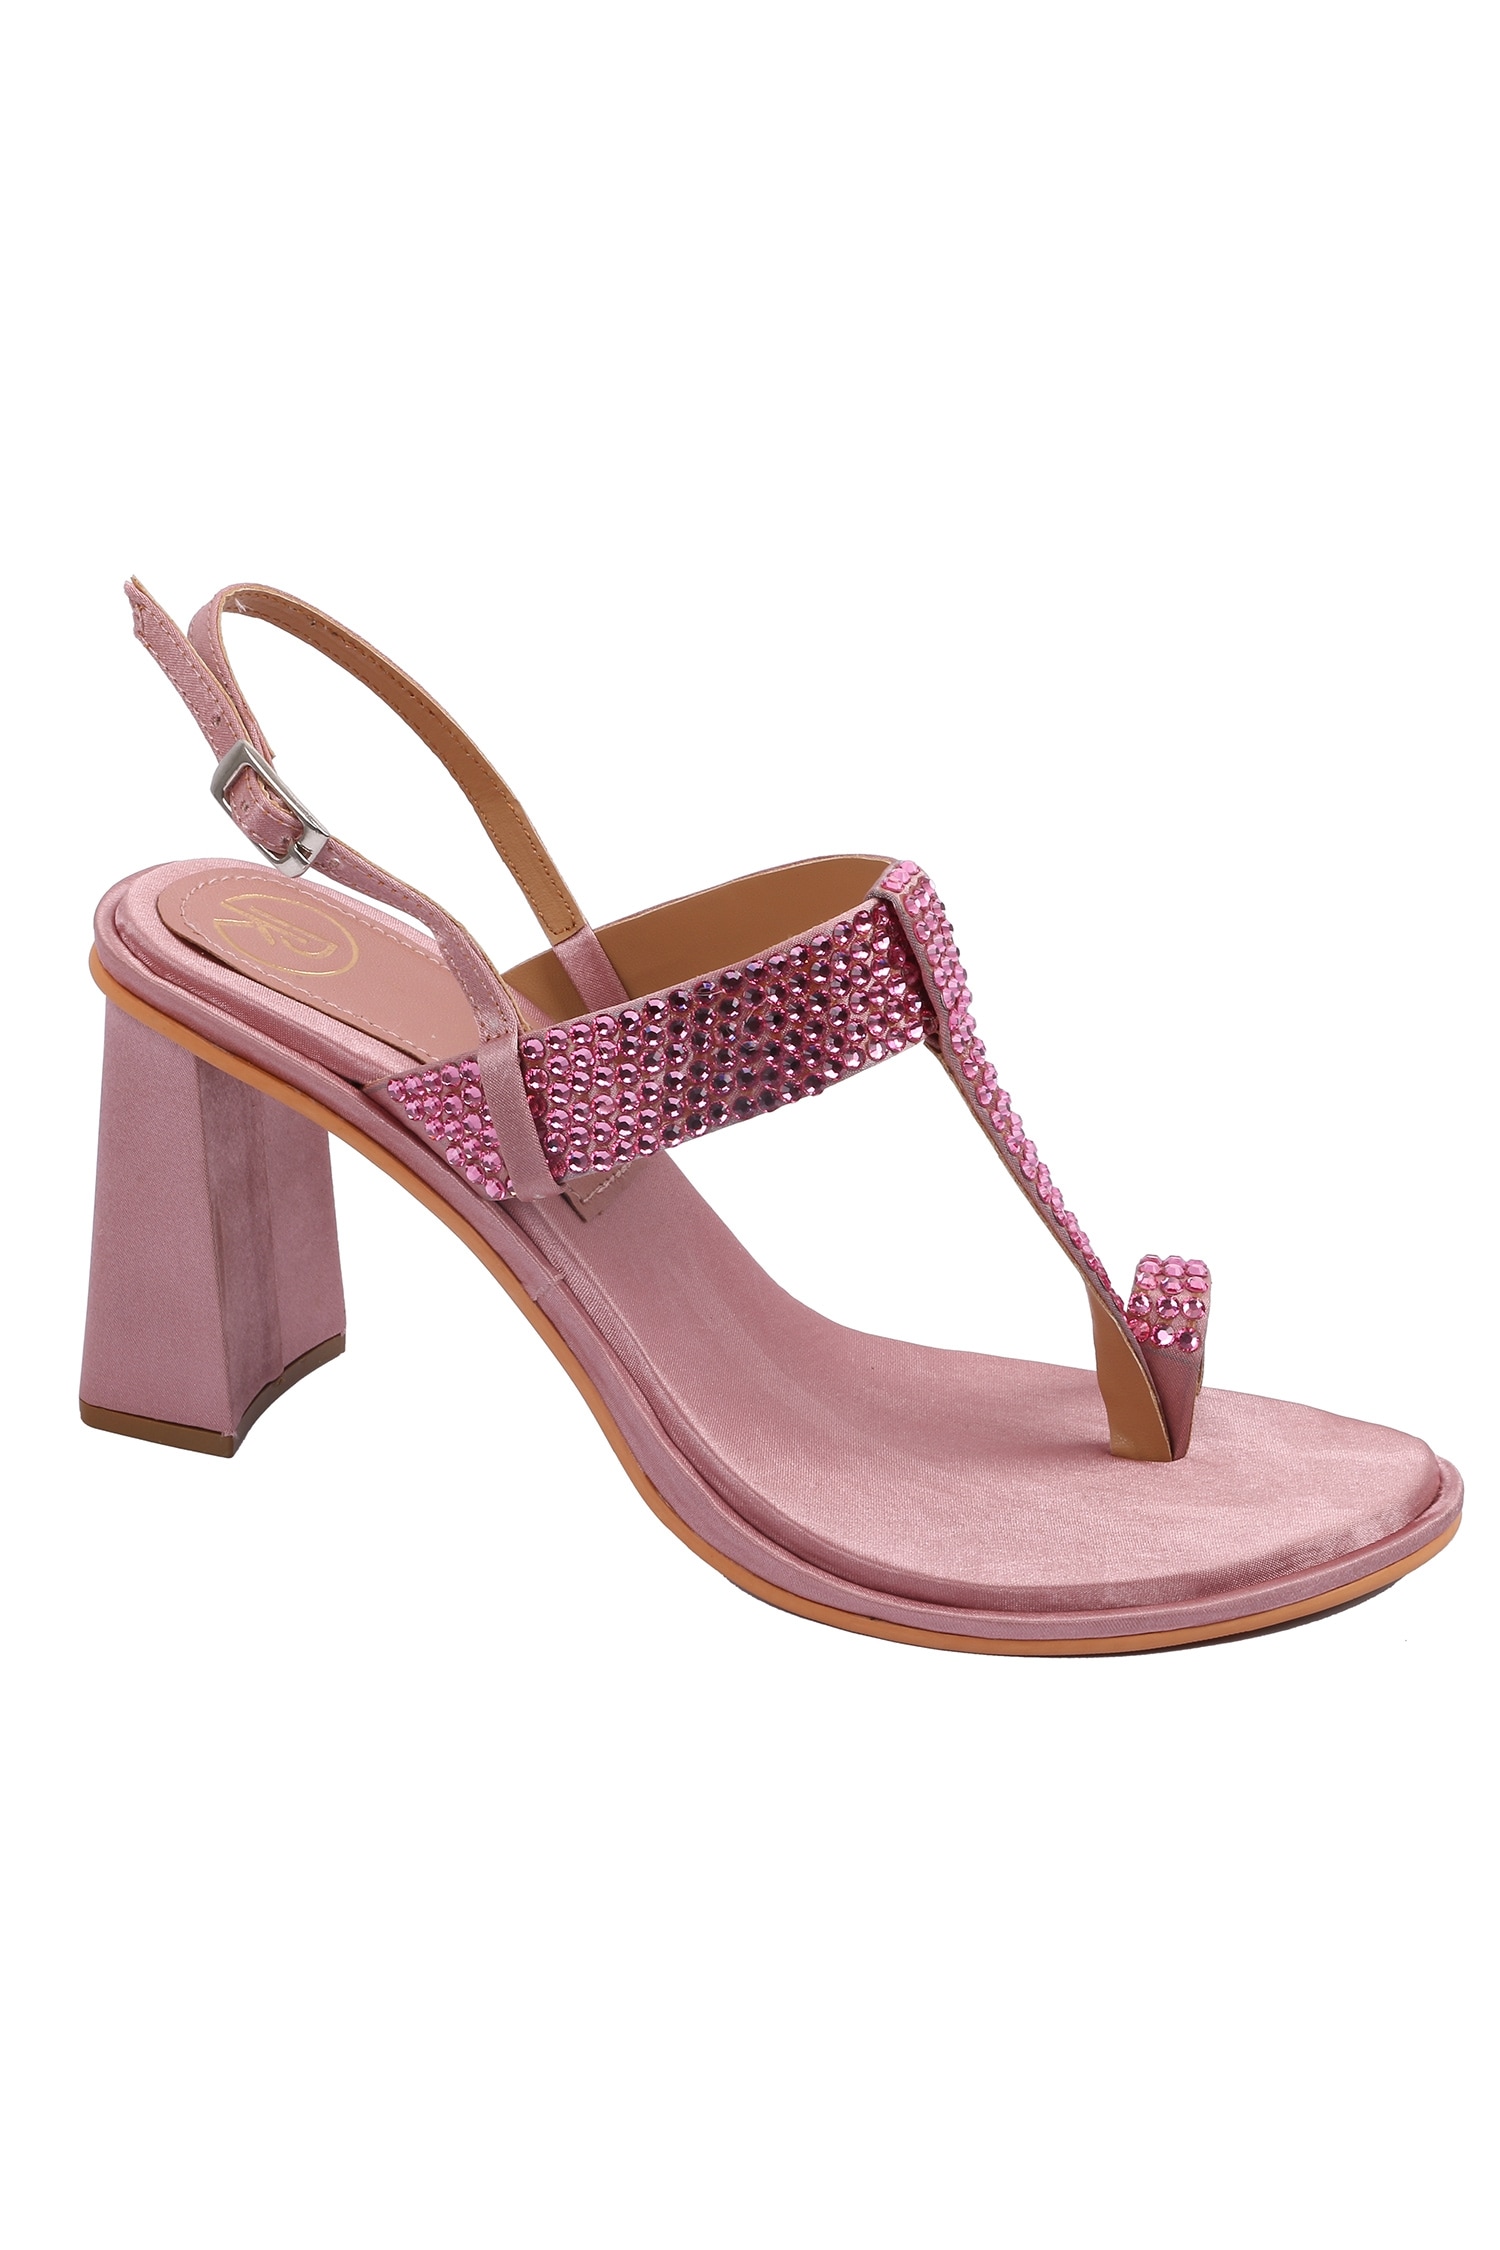 Transparent Women's Floral Mules Shoes Crystal Mid Block Heels Open Toe  Sandals | eBay